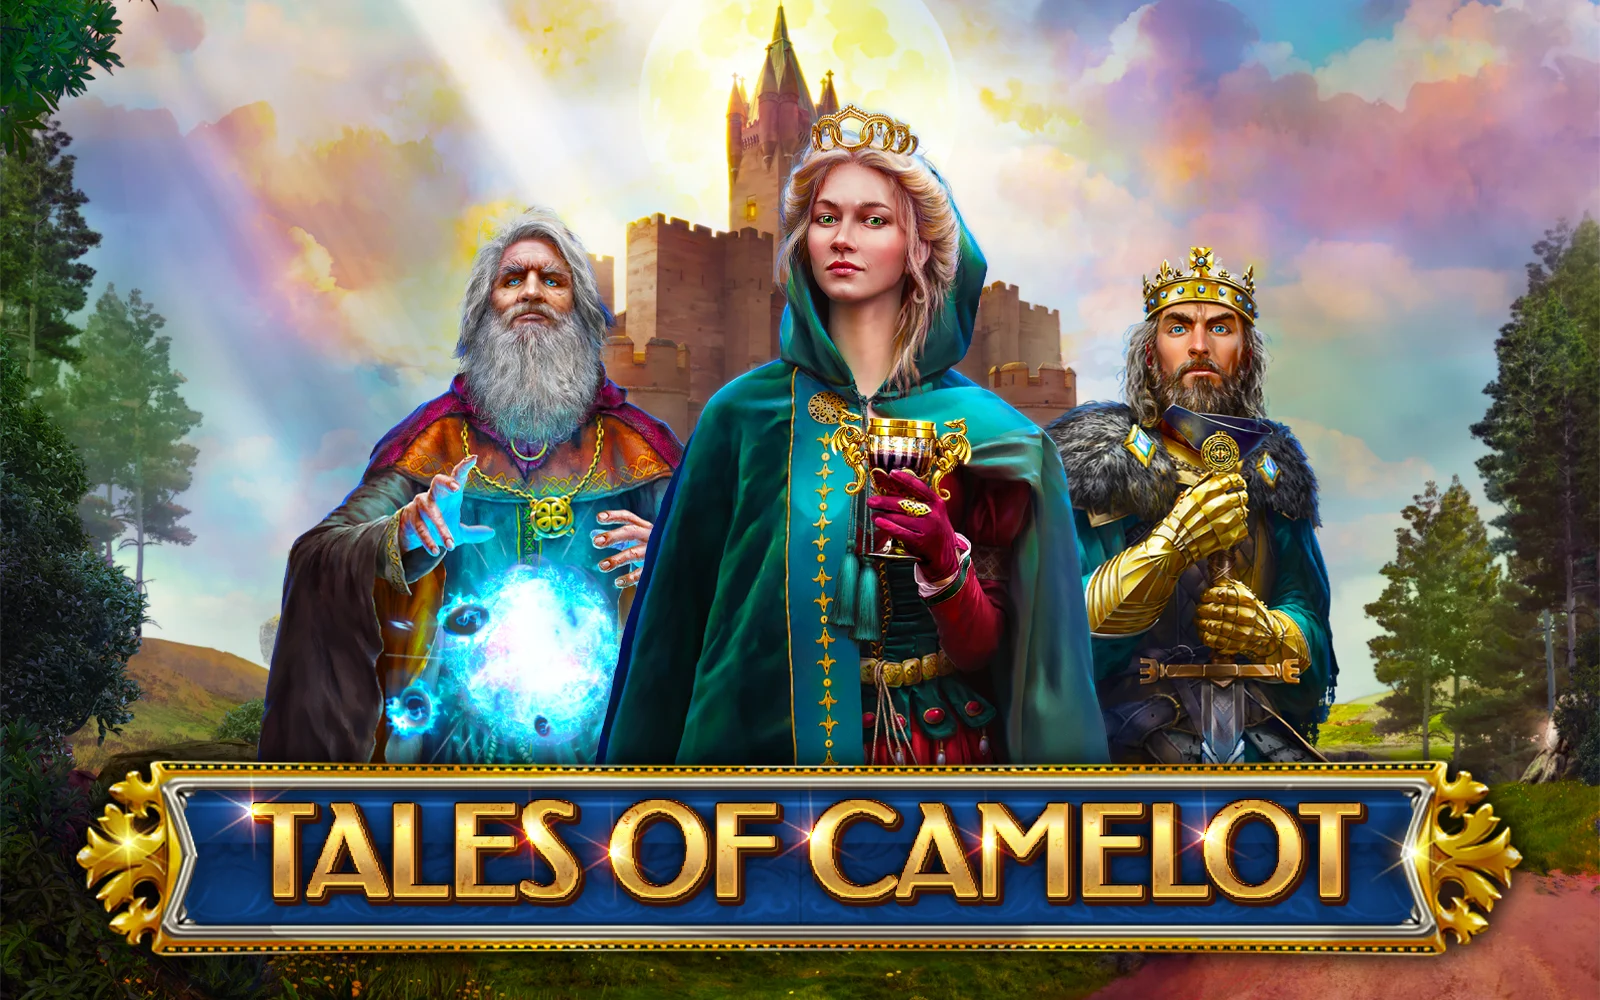 Juega a Tales Of Camelot en el casino en línea de Starcasino.be